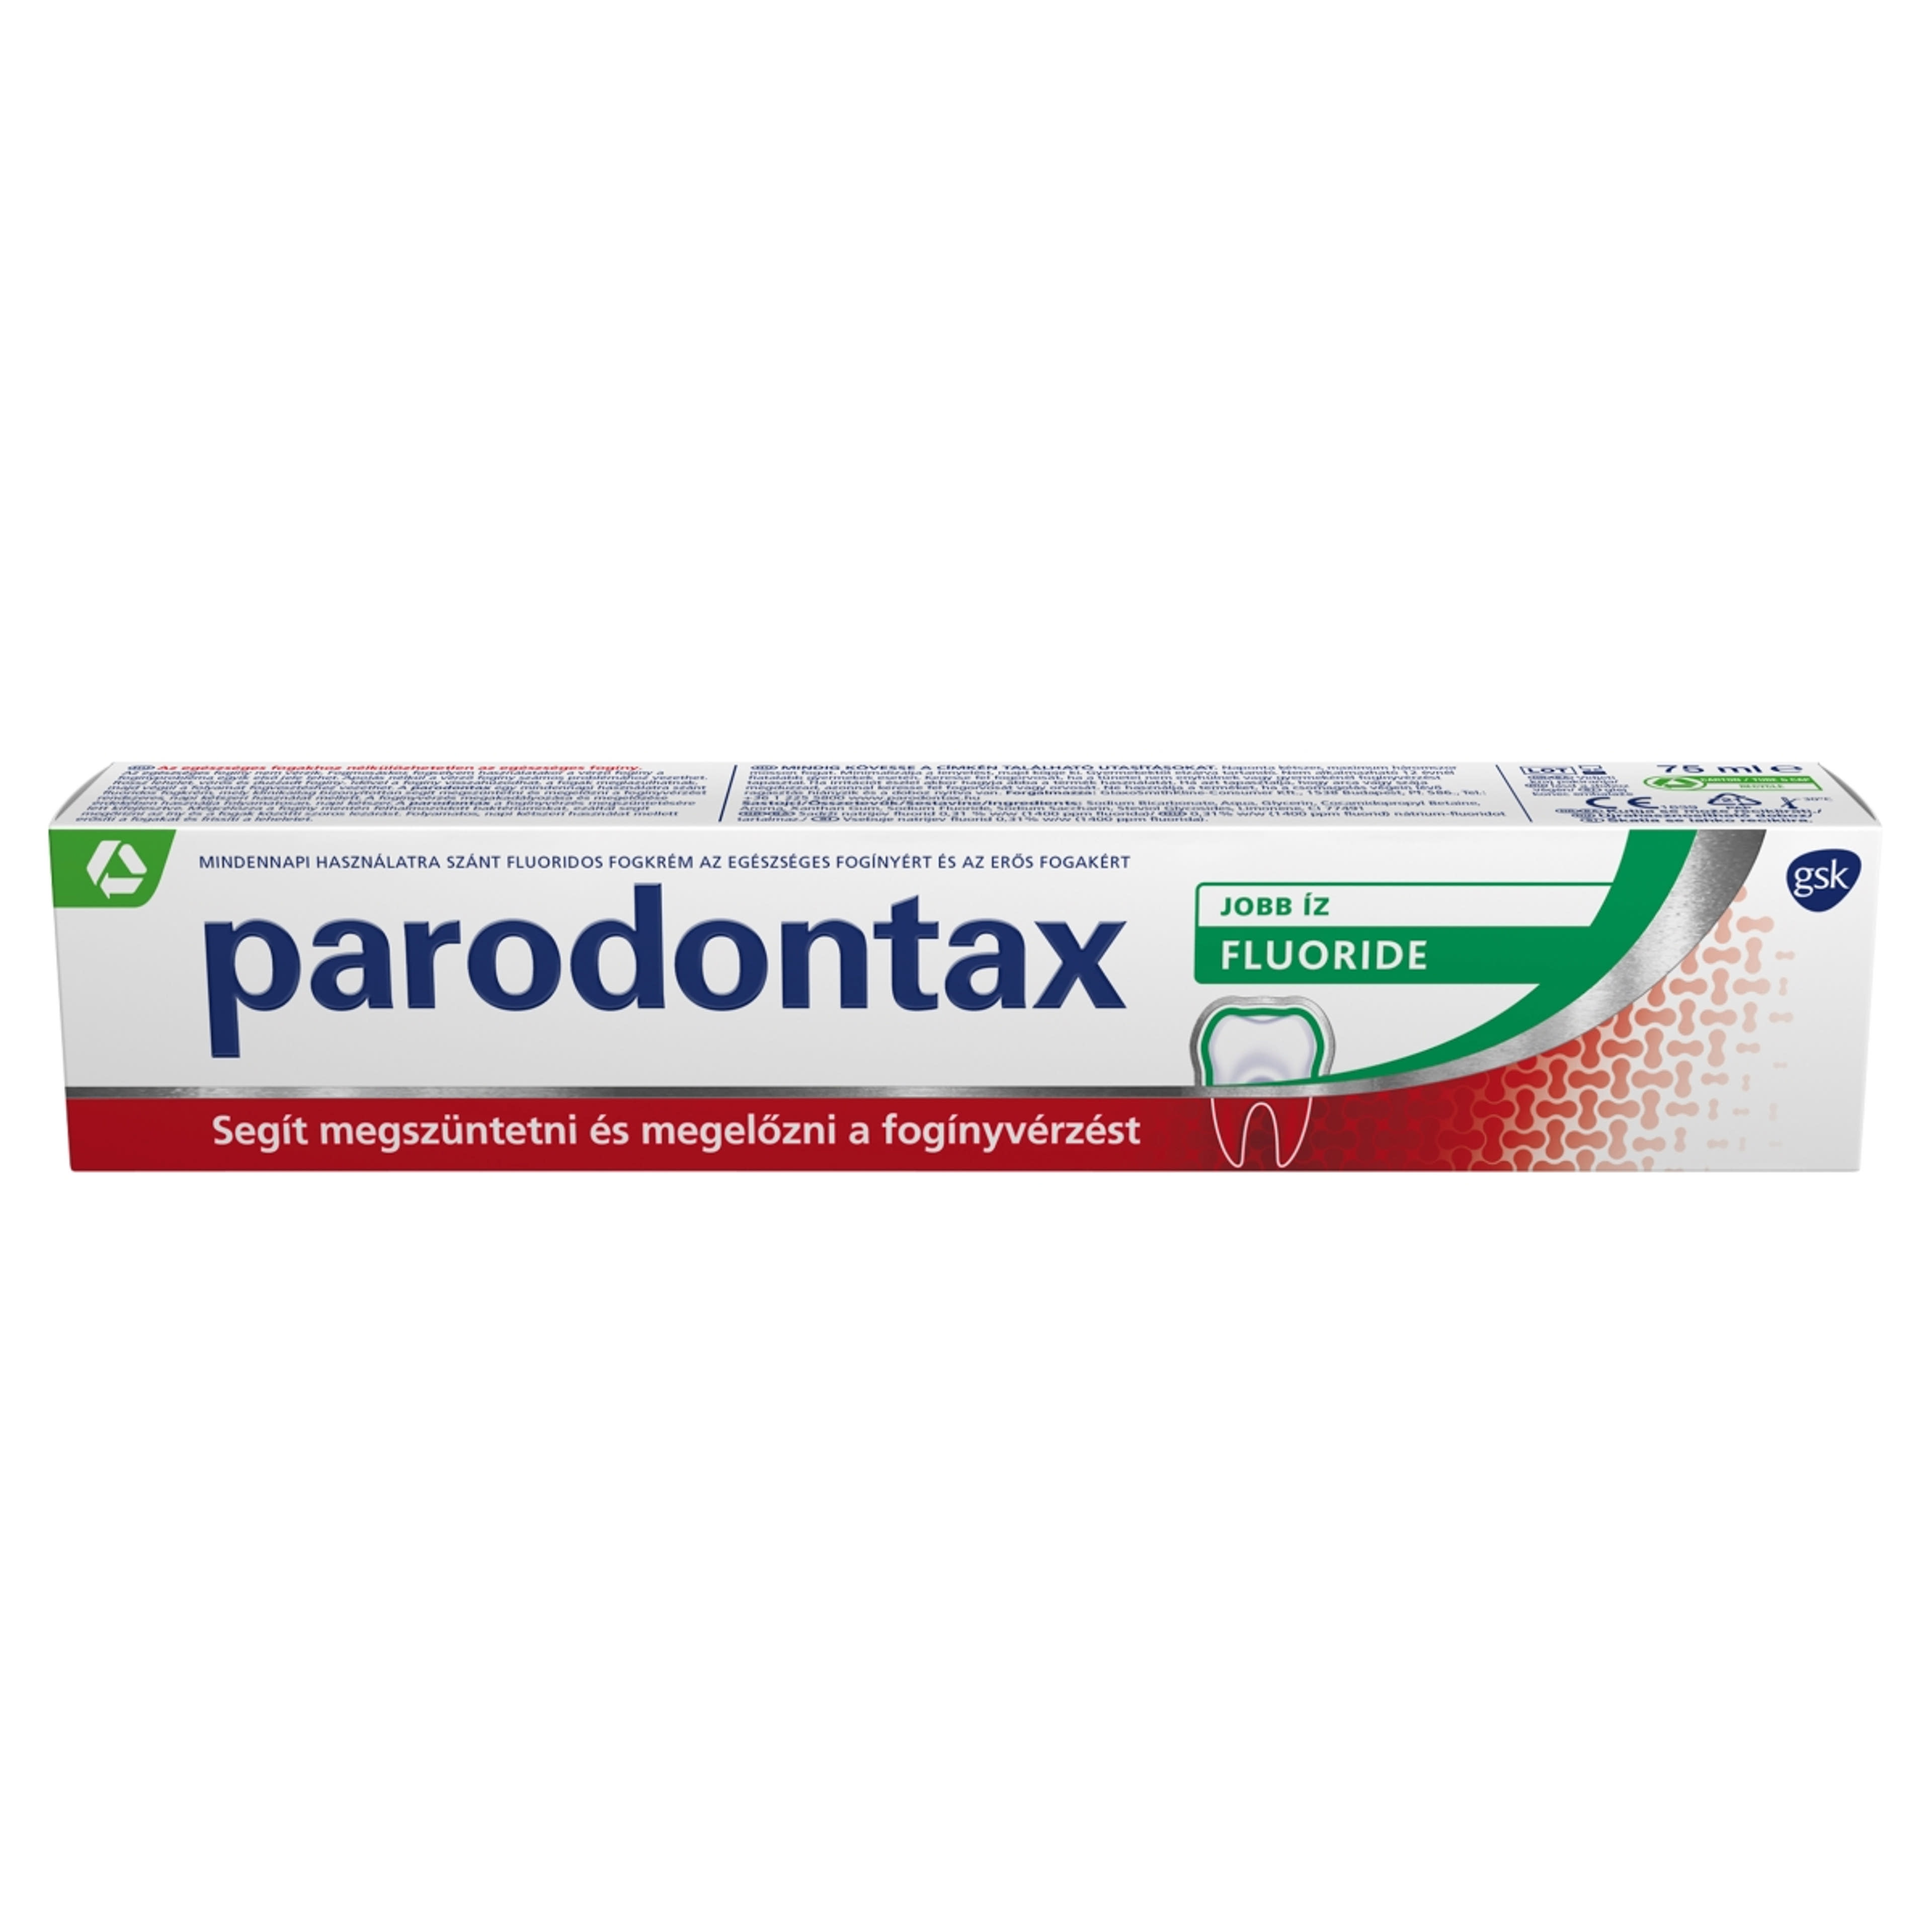 Parodontax Fluoride fogkrém - 75 ml-1